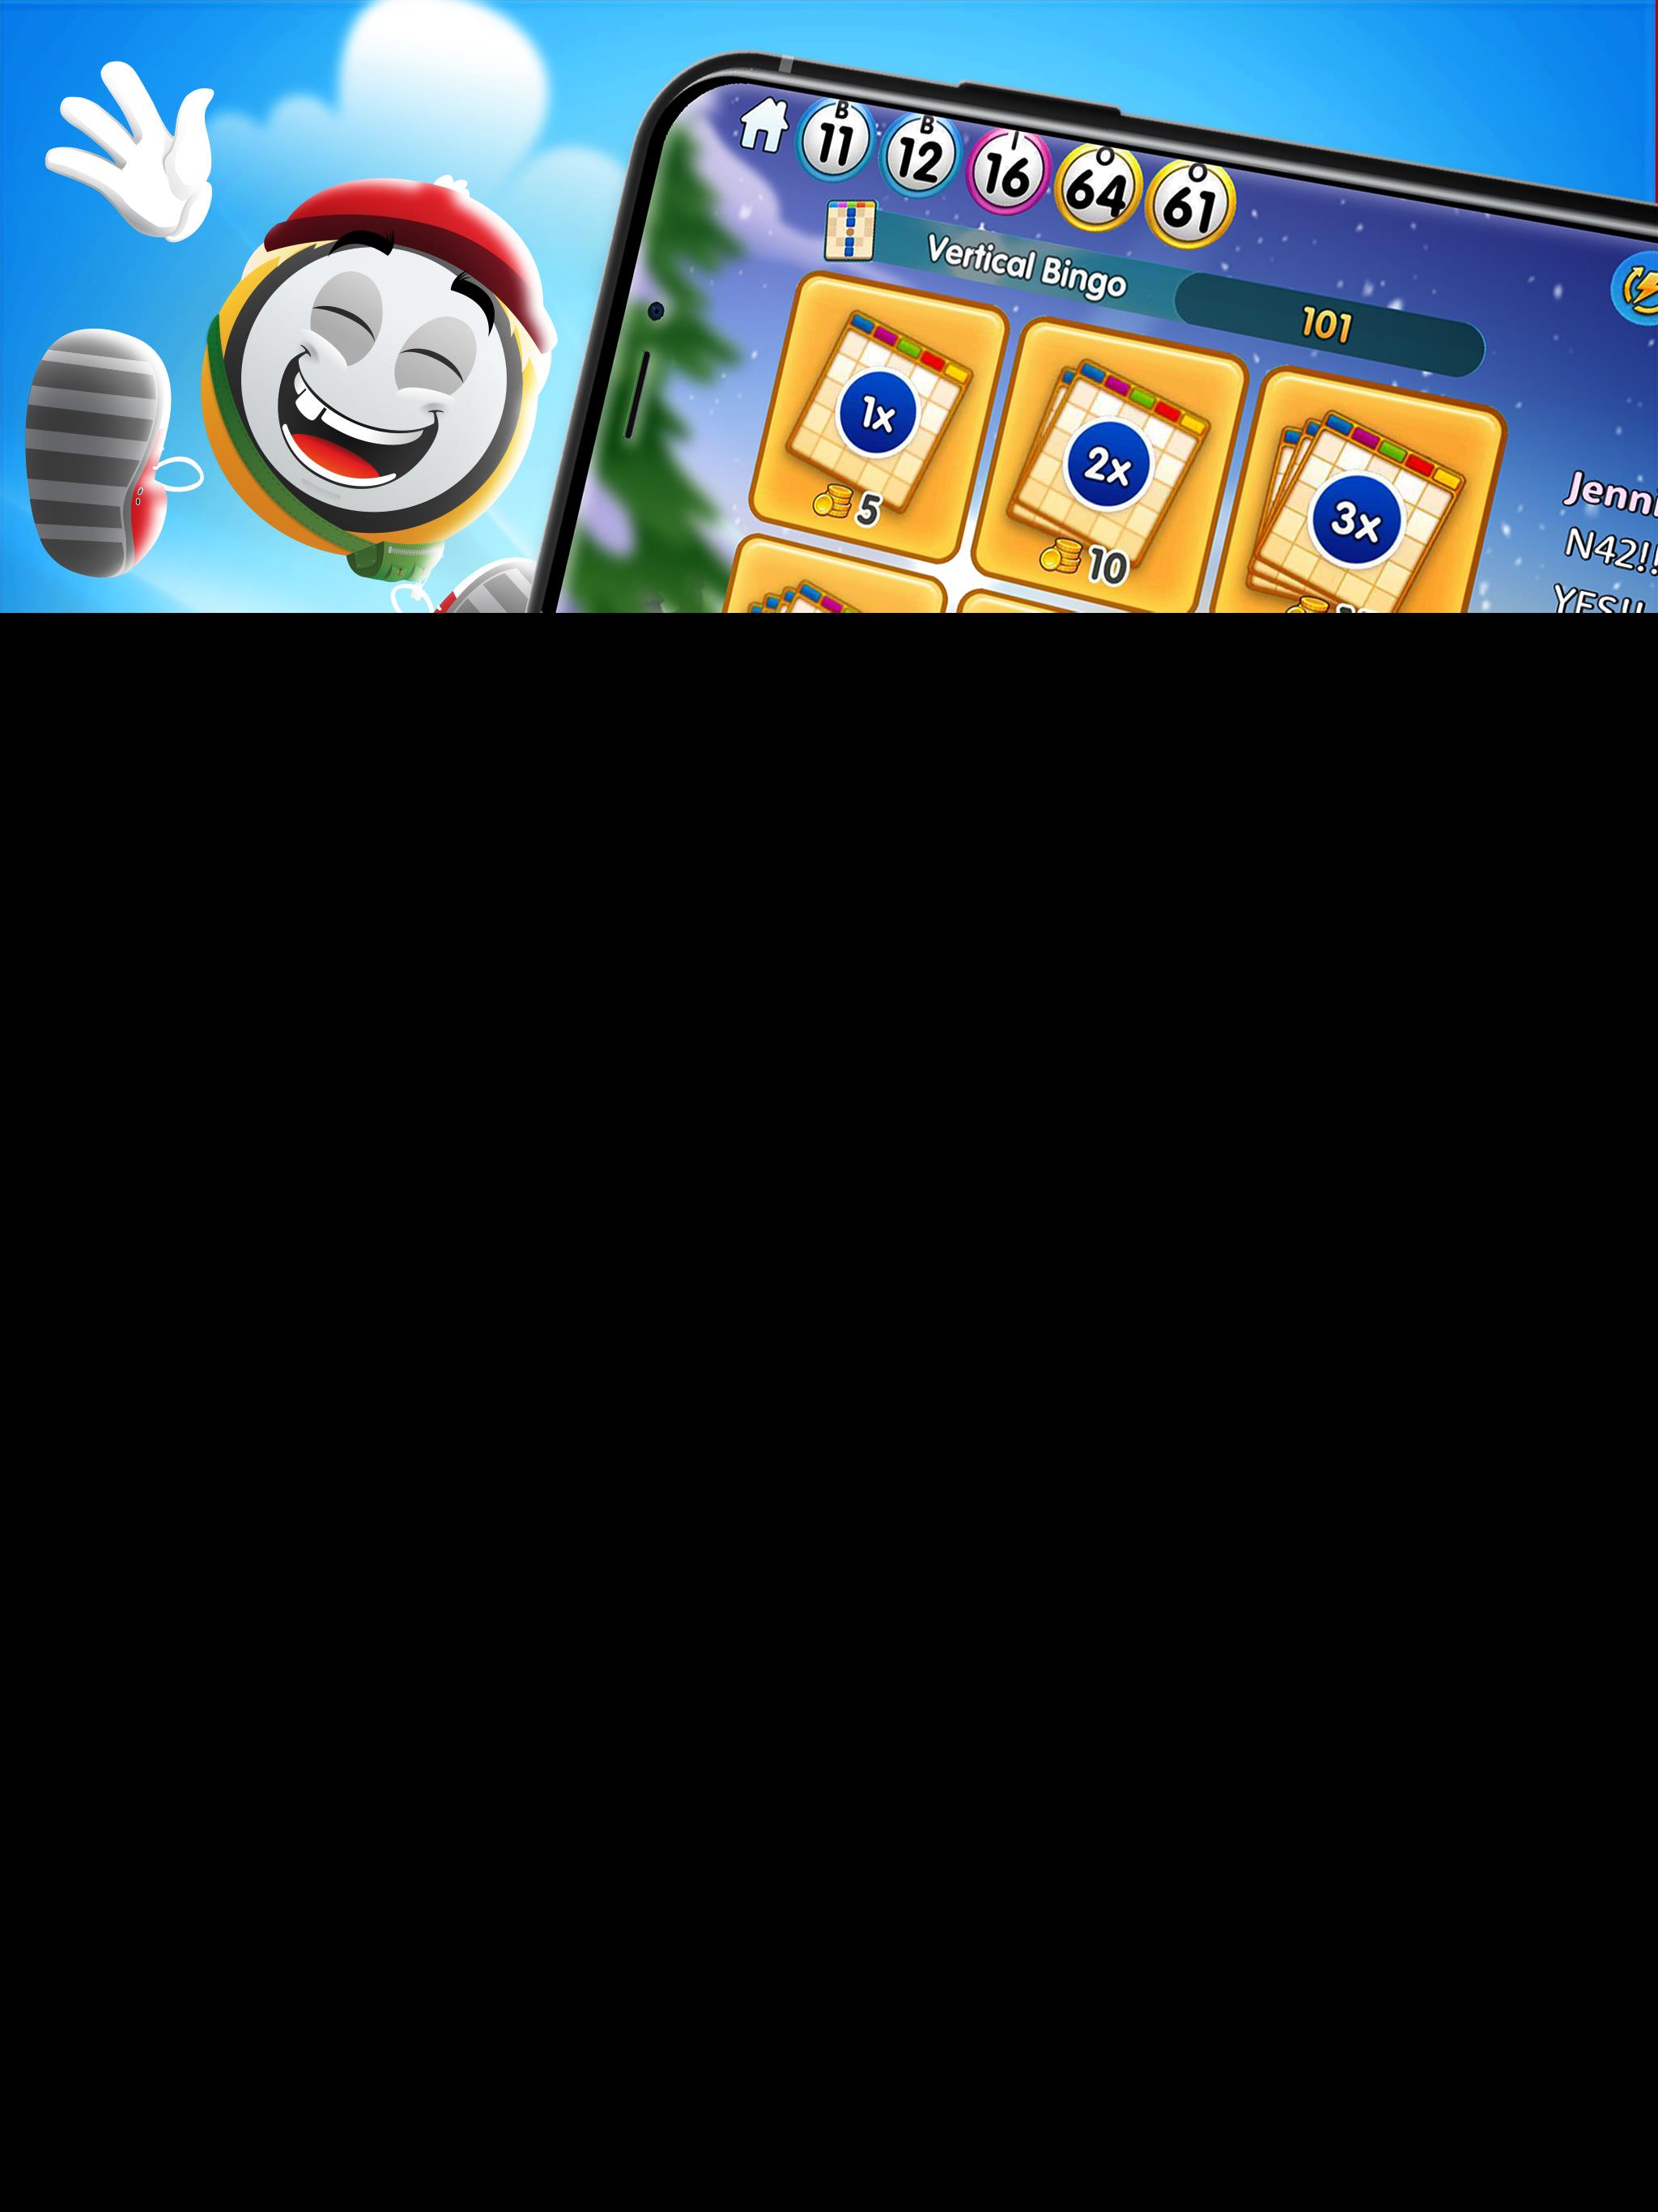 GamePoint Bingo - Bingo games Screenshot 19